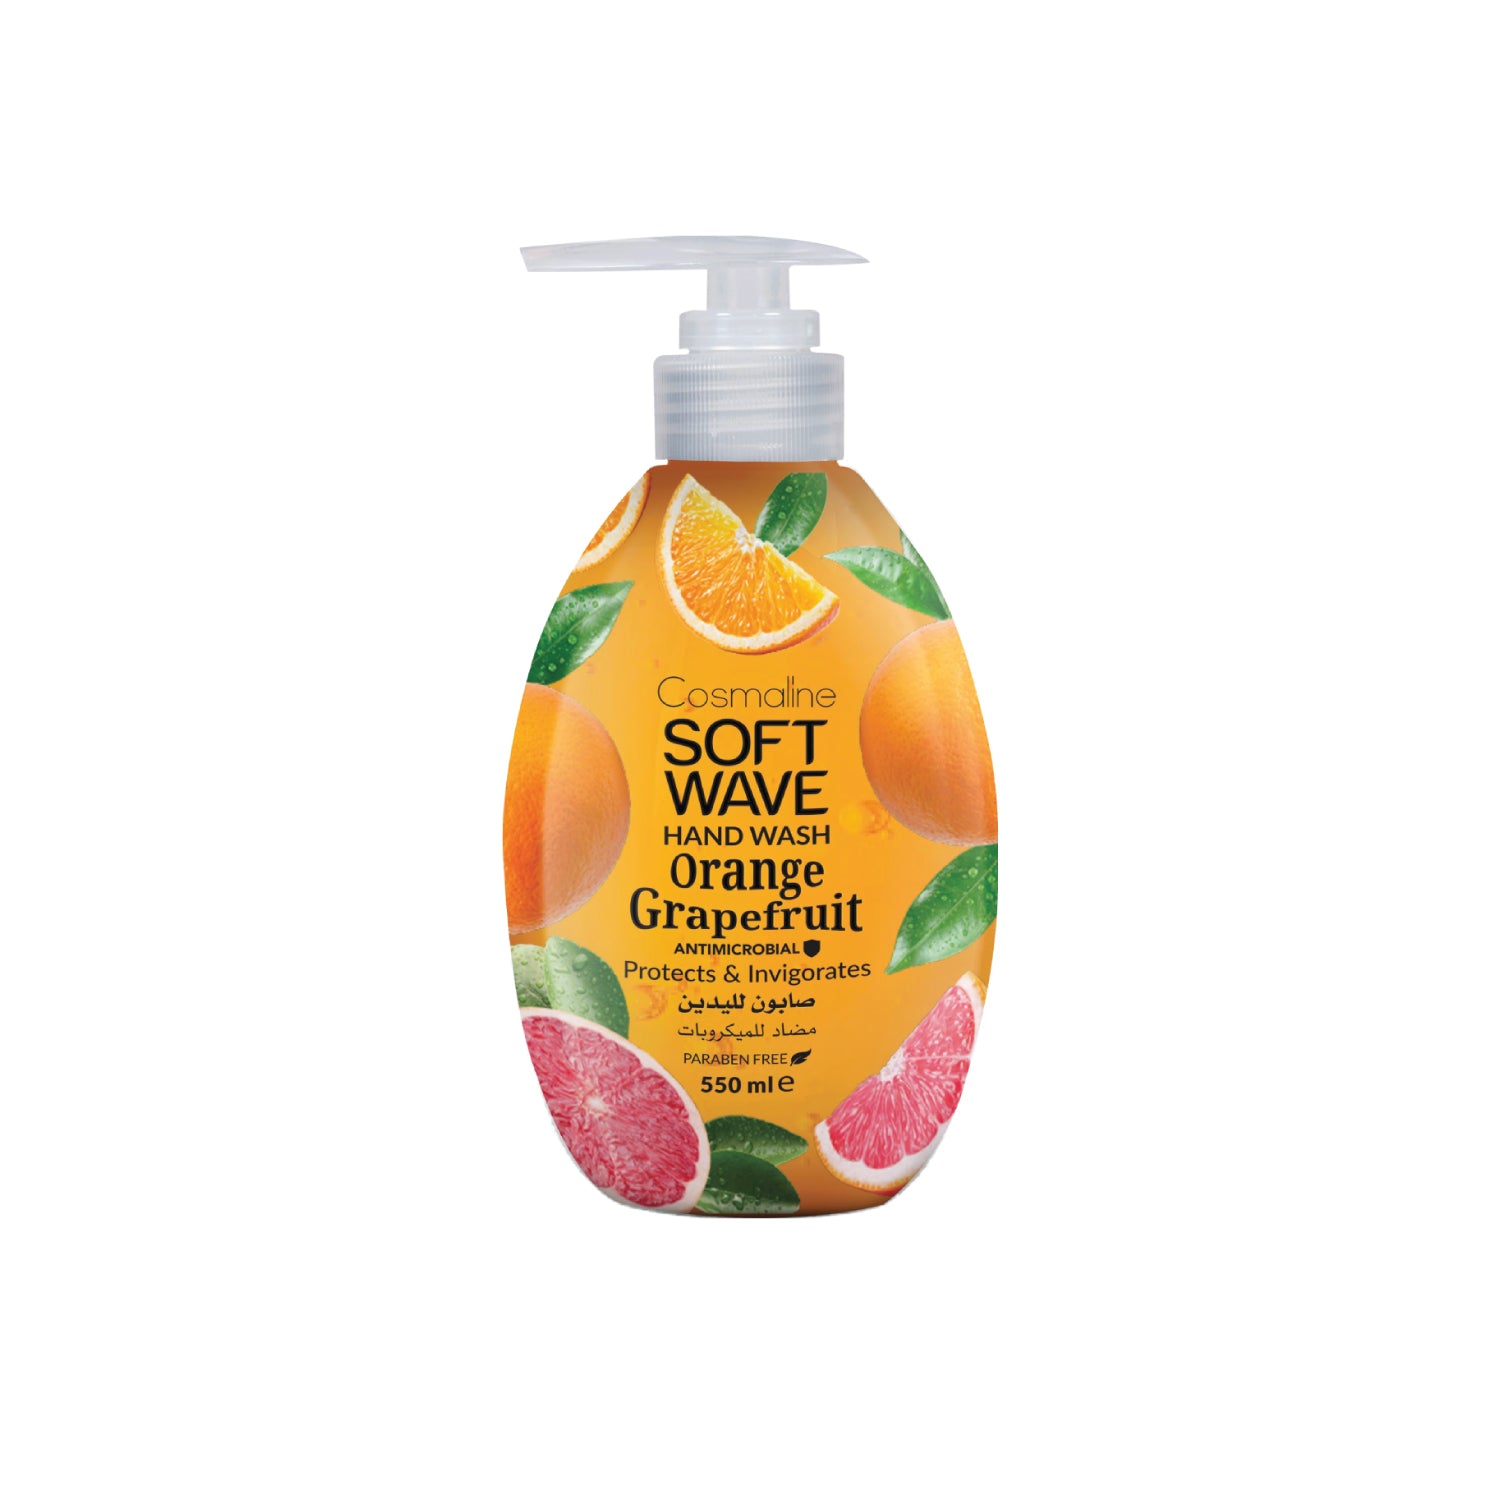 Soft Wave Hand Wash Orange Grapefruit 550ml - MazenOnline